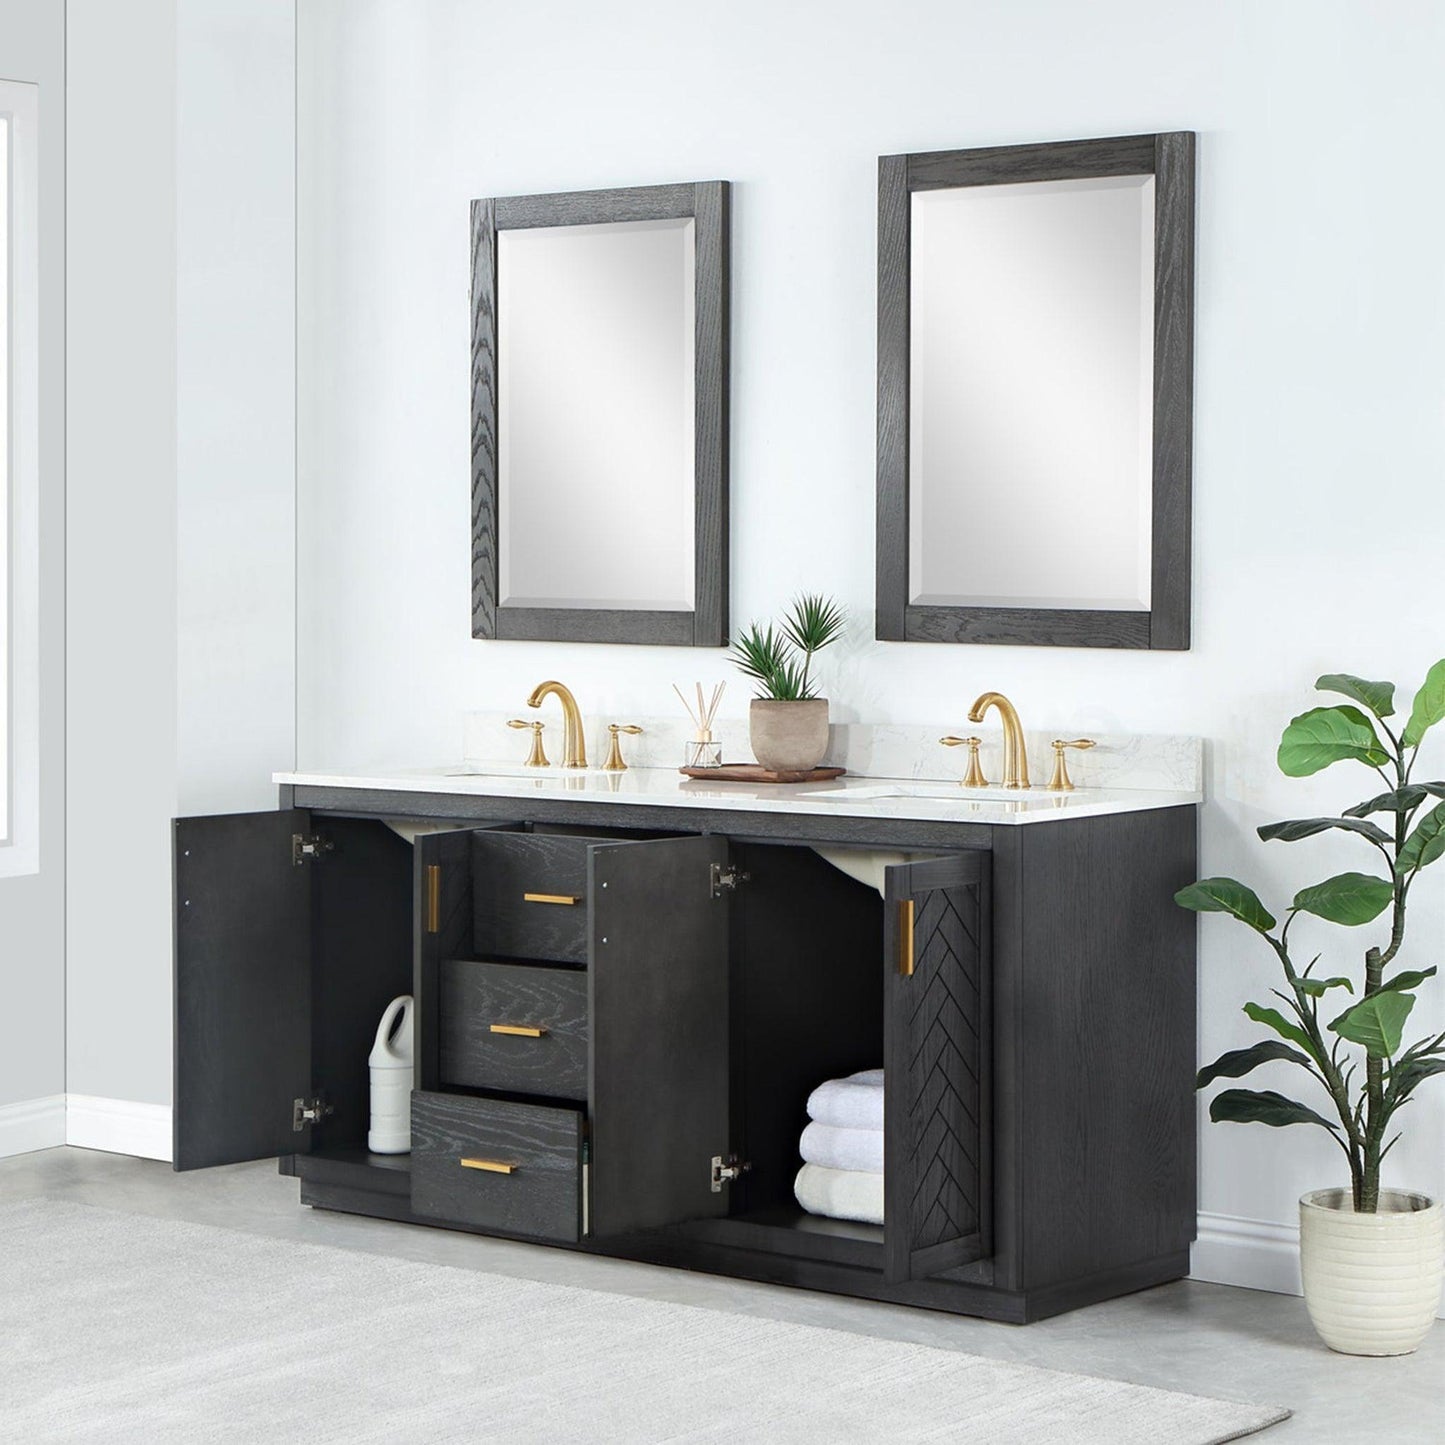 Altair Gazsi 72" Brown Oak Freestanding Double Bathroom Vanity Set With Mirror, Elegant Composite Grain White Stone Top, Two Rectangular Undermount Ceramic Sinks, Overflow, and Backsplash